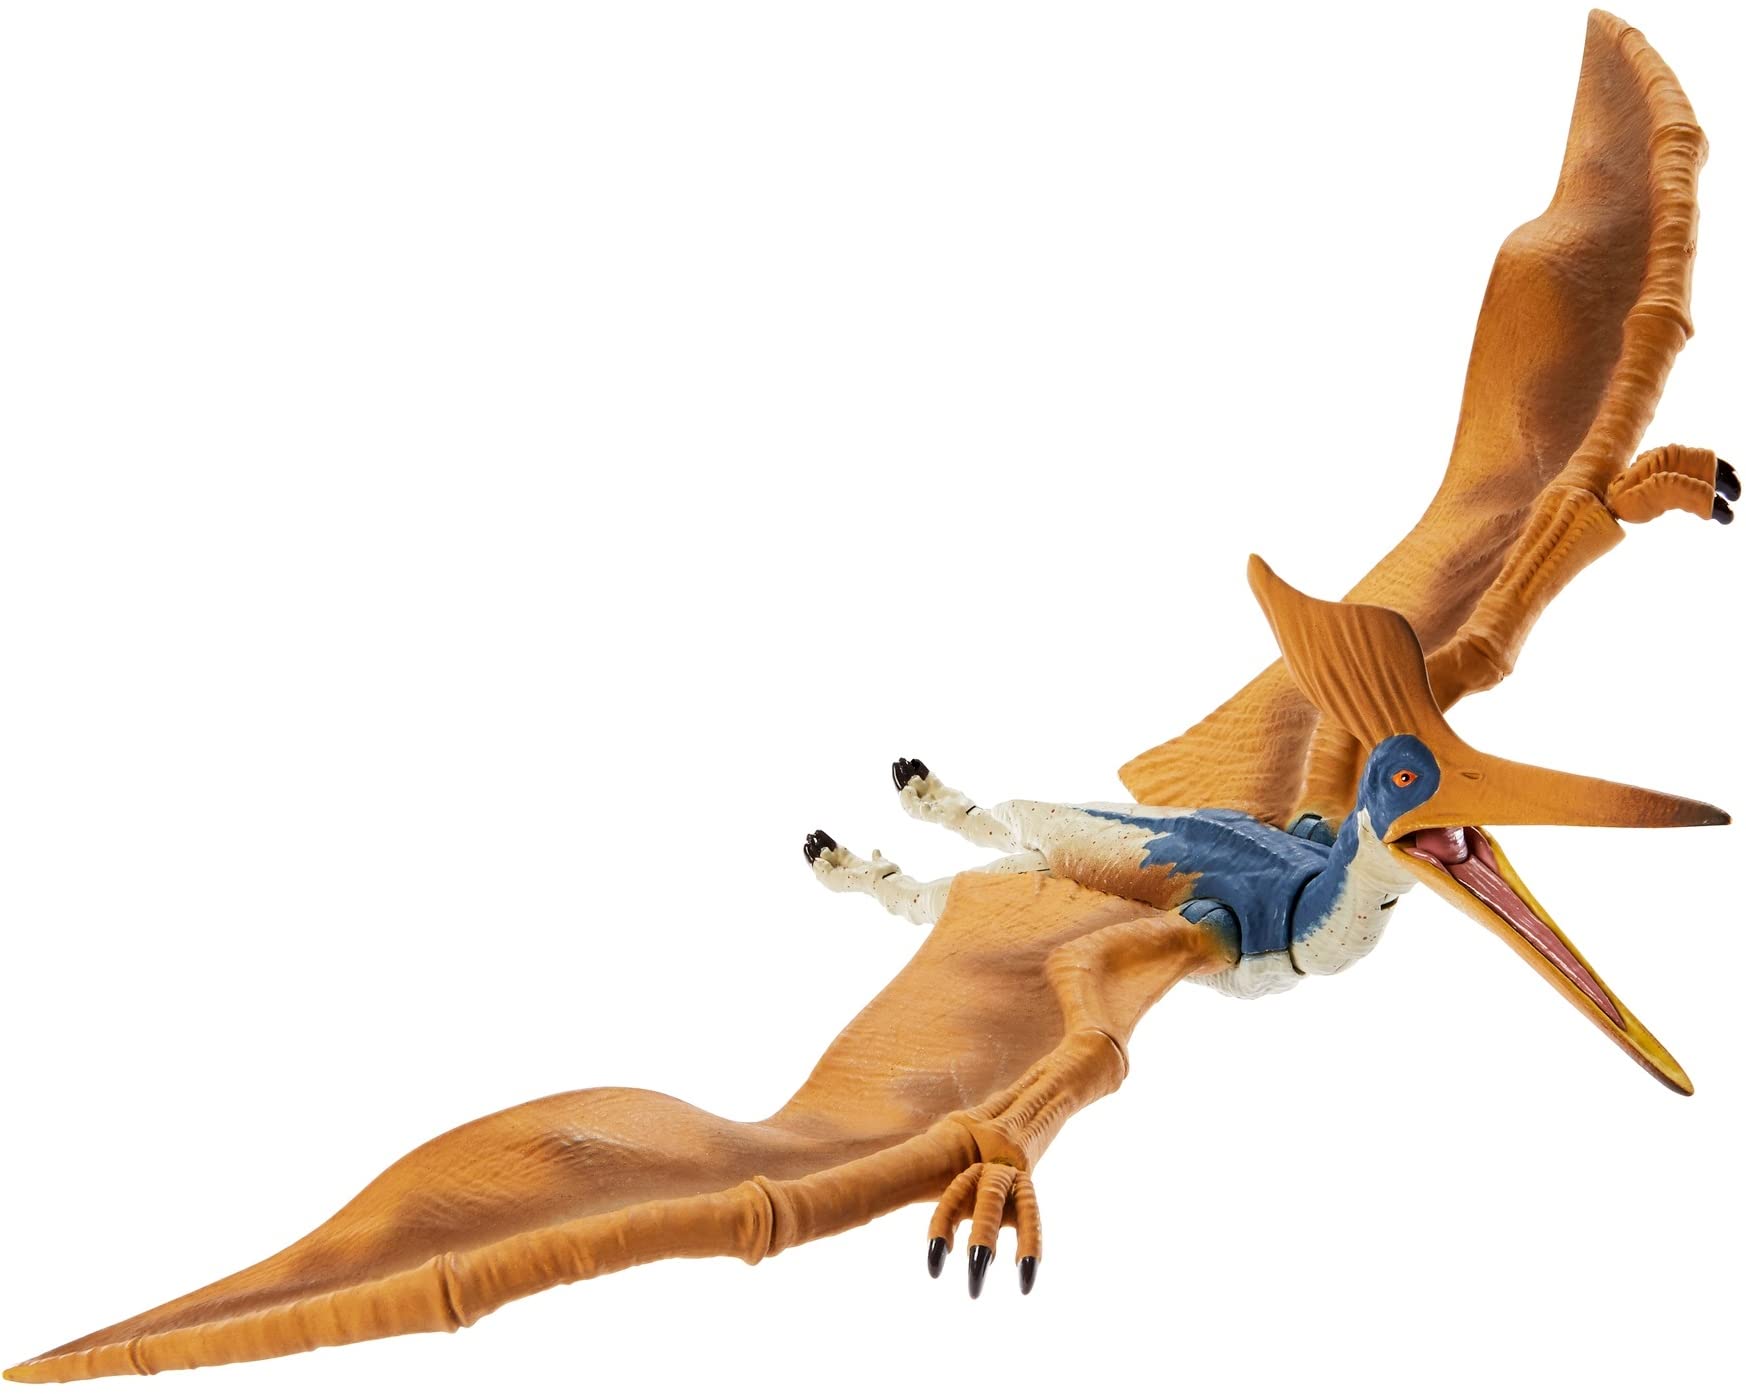 Mattel Jurassic World Lost World: Jurassic Park Hammond Collection Geosternbergia Dinosaur Action Figure with Deluxe Articulation - $11.54 - Amazon